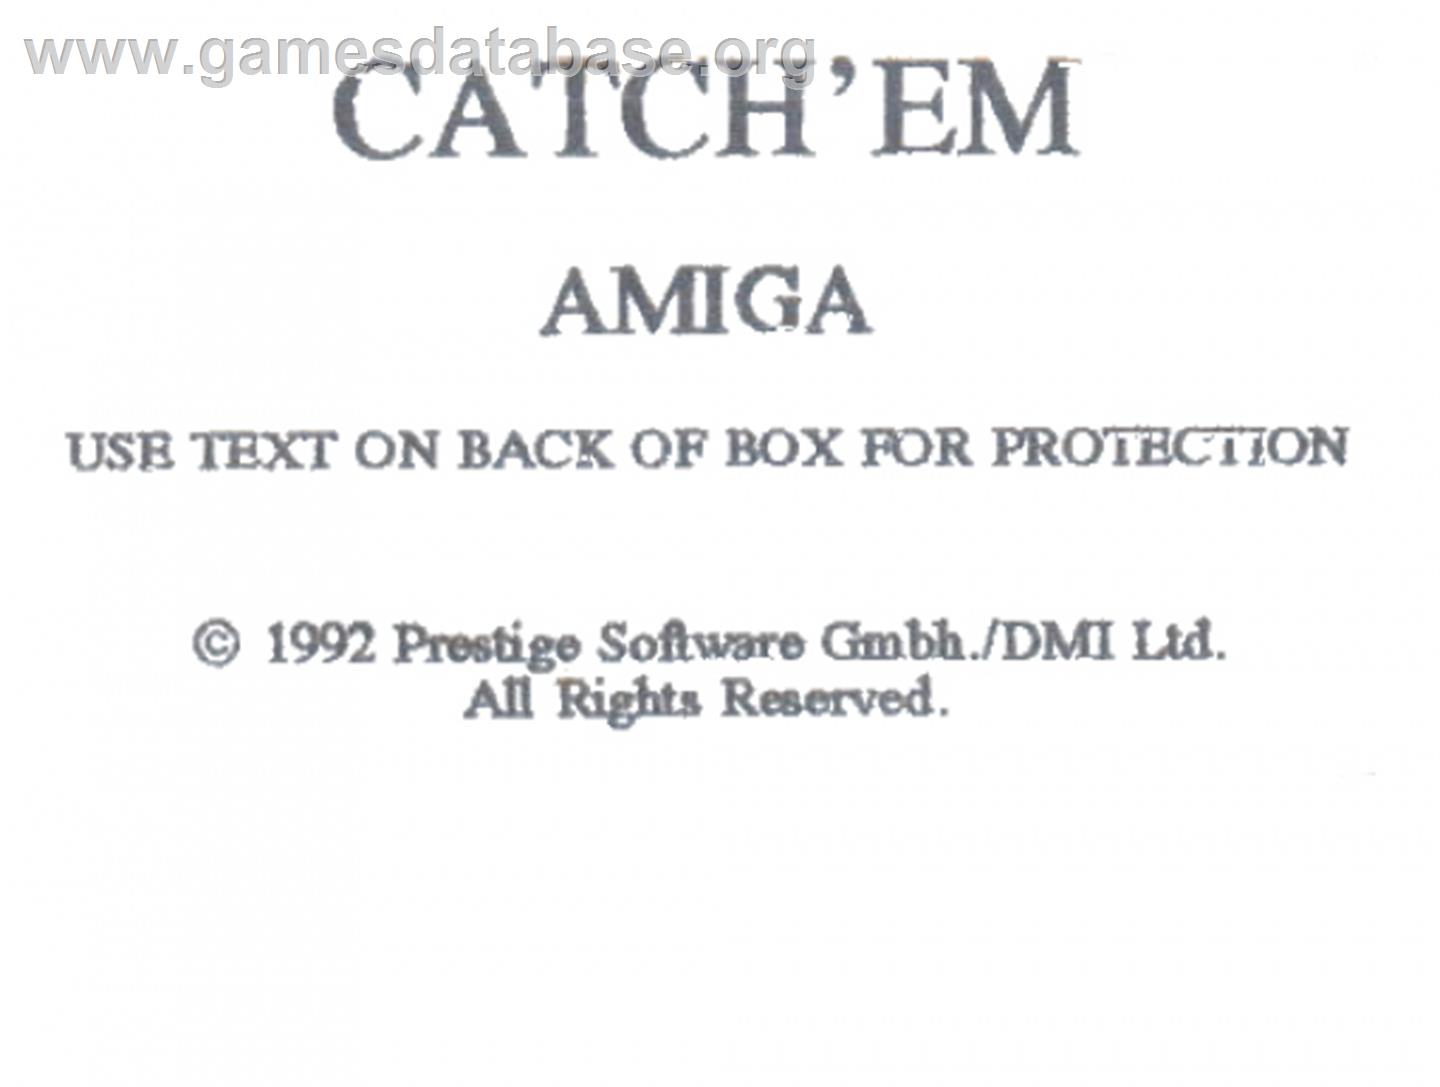 Catch 'em - Commodore Amiga - Artwork - Cartridge Top